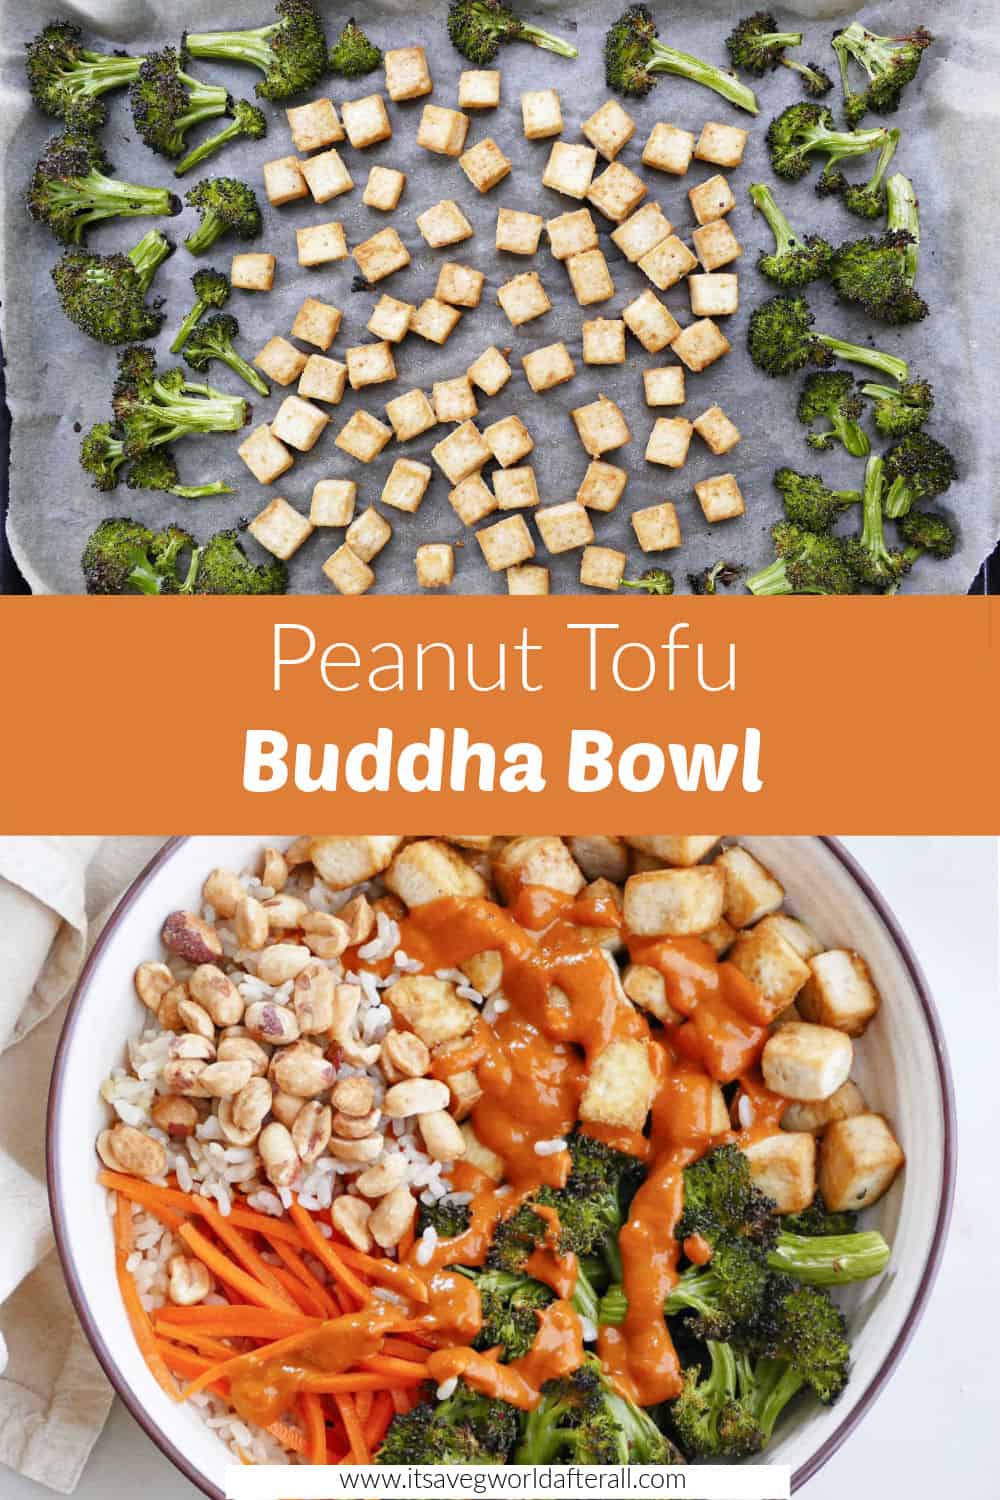 Spicy Peanut Tofu Buddha Bowl - It's a Veg World After All®